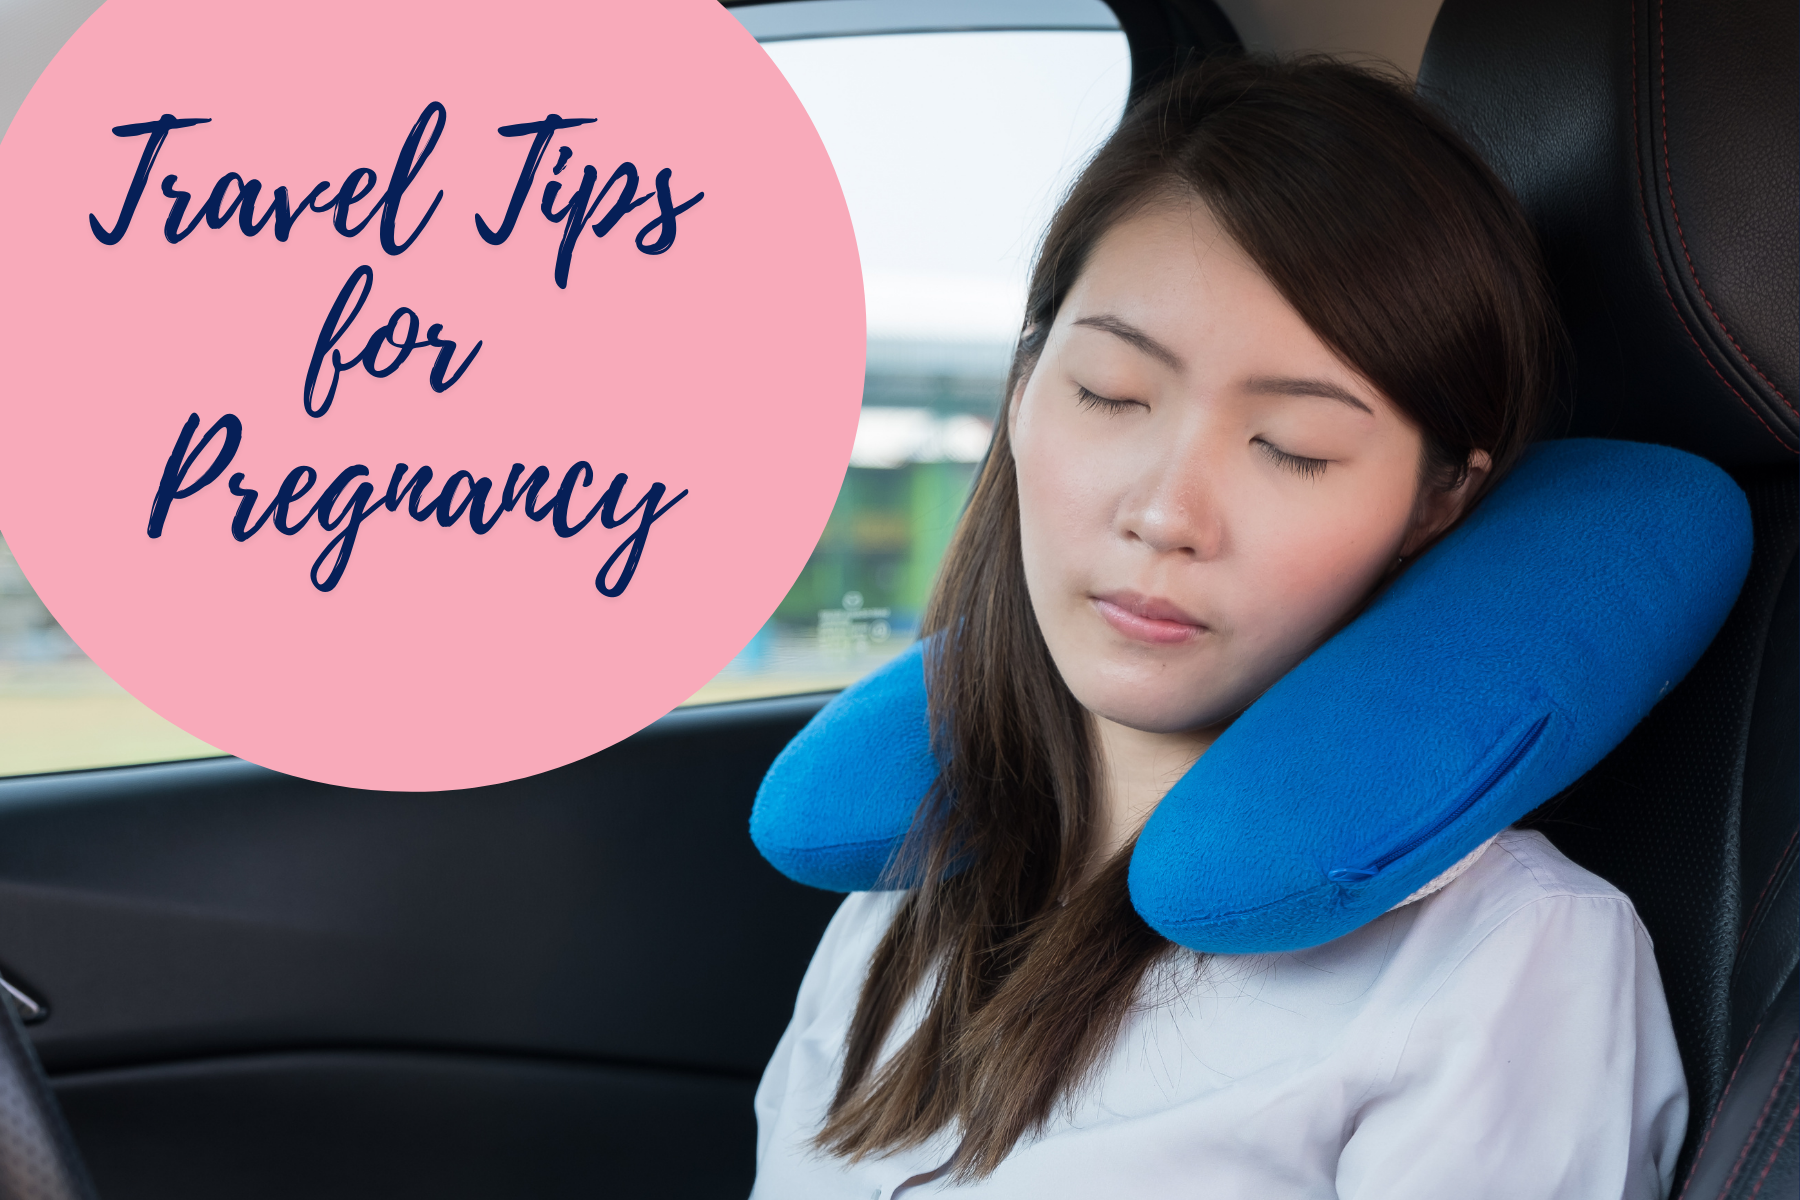 Travel Tips for Pregnancy